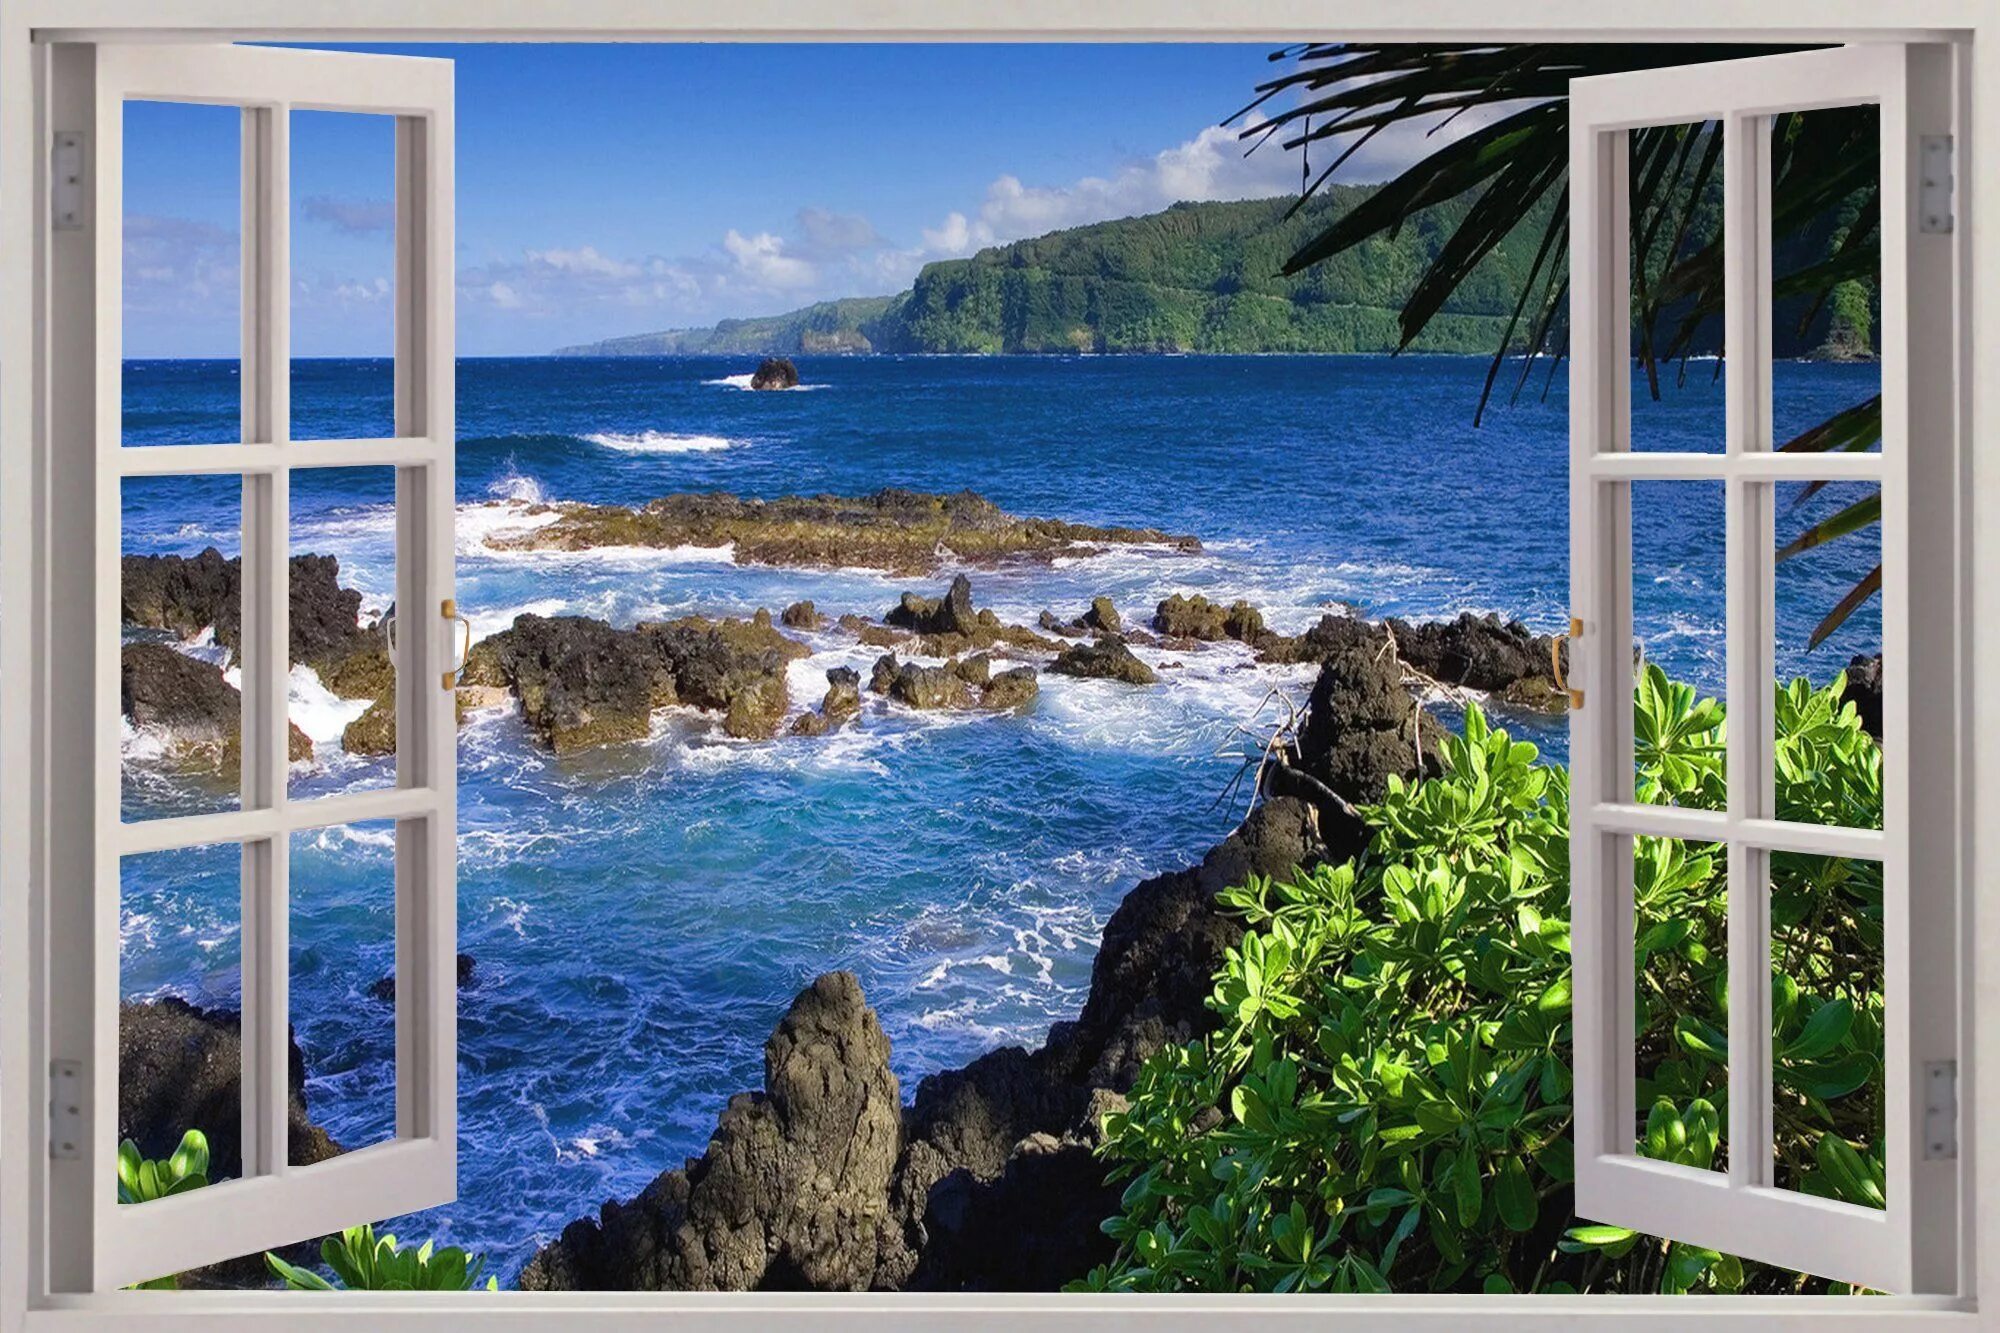 Картинка вид. Фотообои окно, море. Окно с видом на море. Фотообои окно с видом на море. Вид из окна на море.